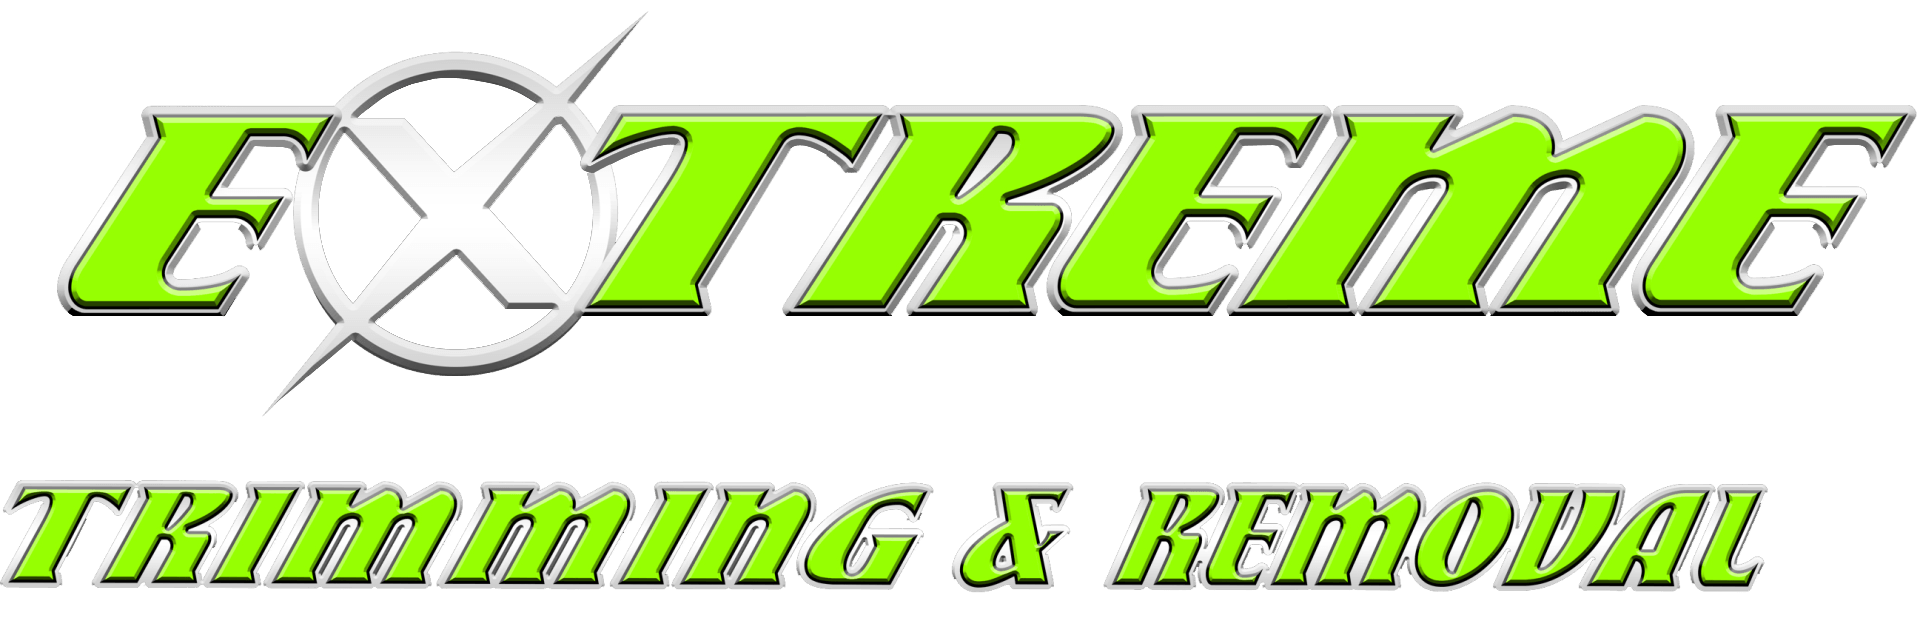 Extreme Tree Service, LLC logo